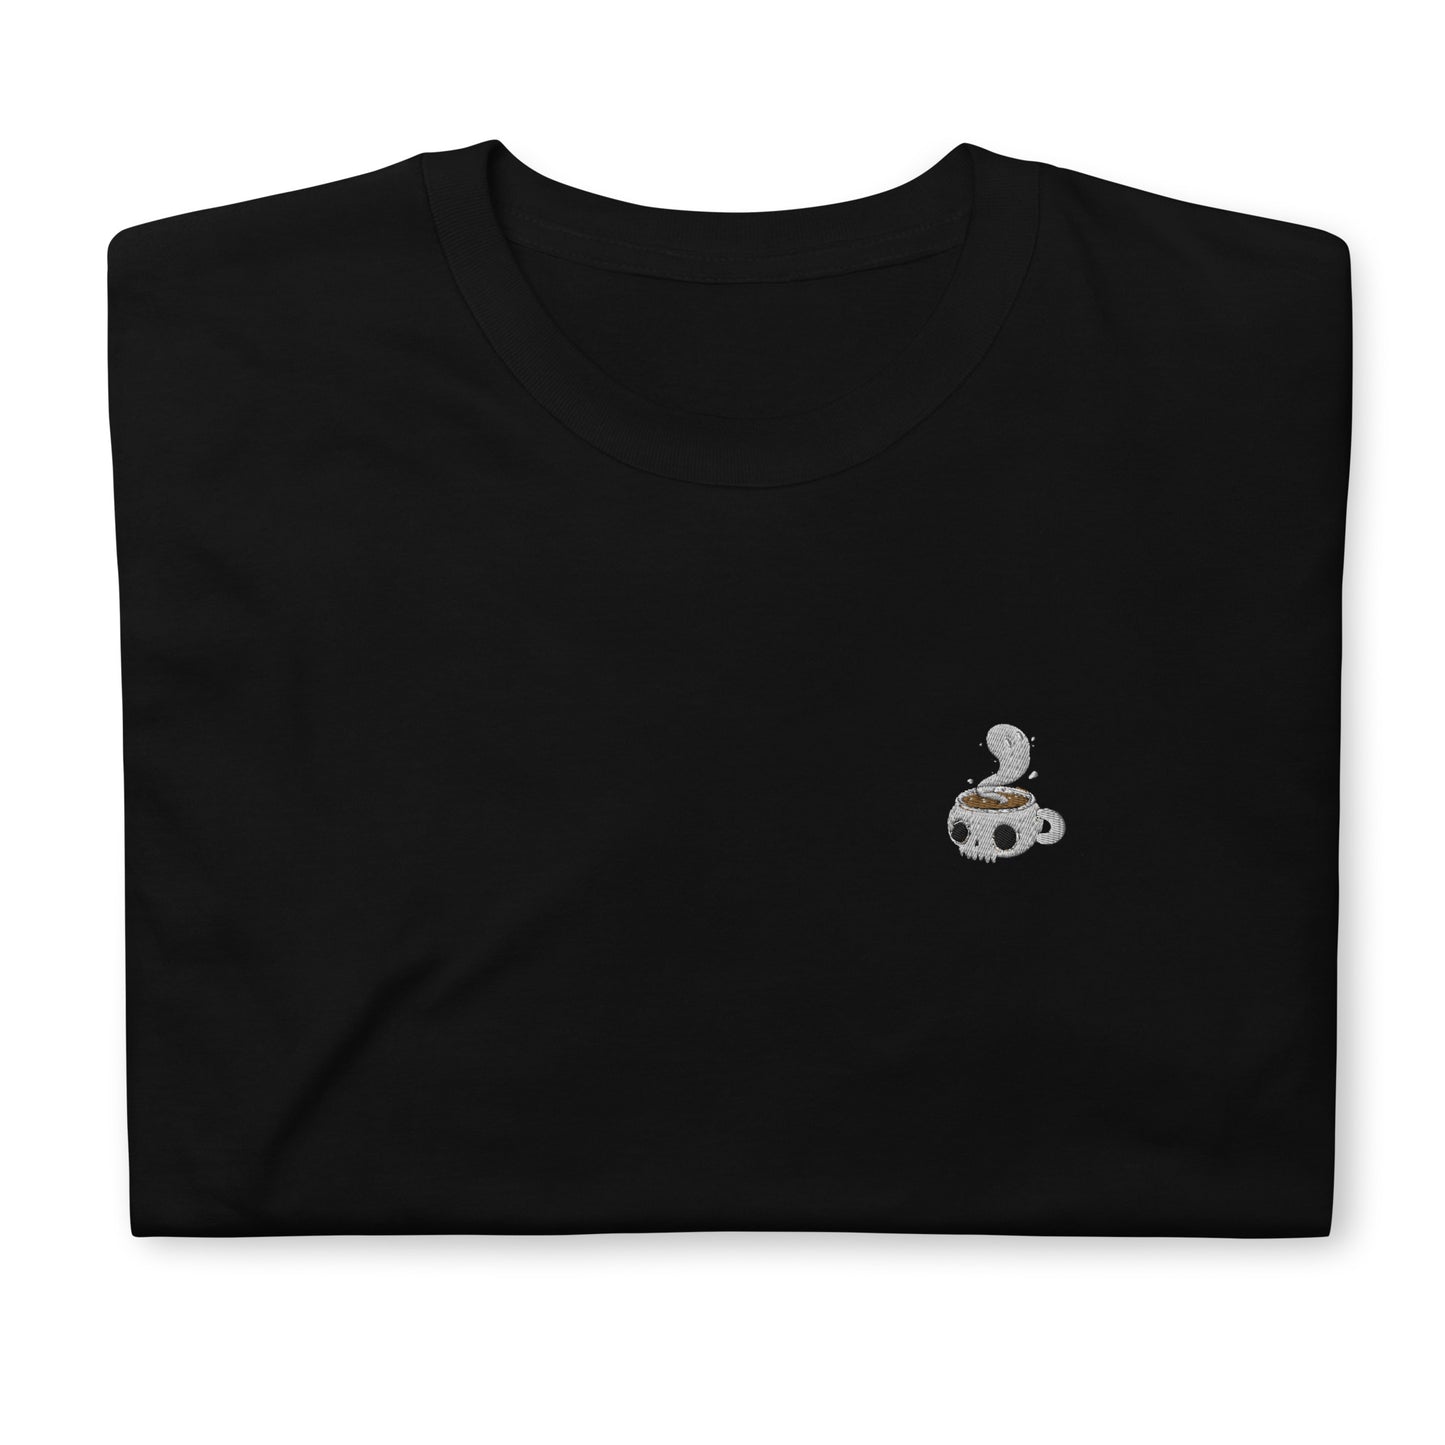 Coffee spirit skull mug Short-Sleeve Unisex T-Shirt.